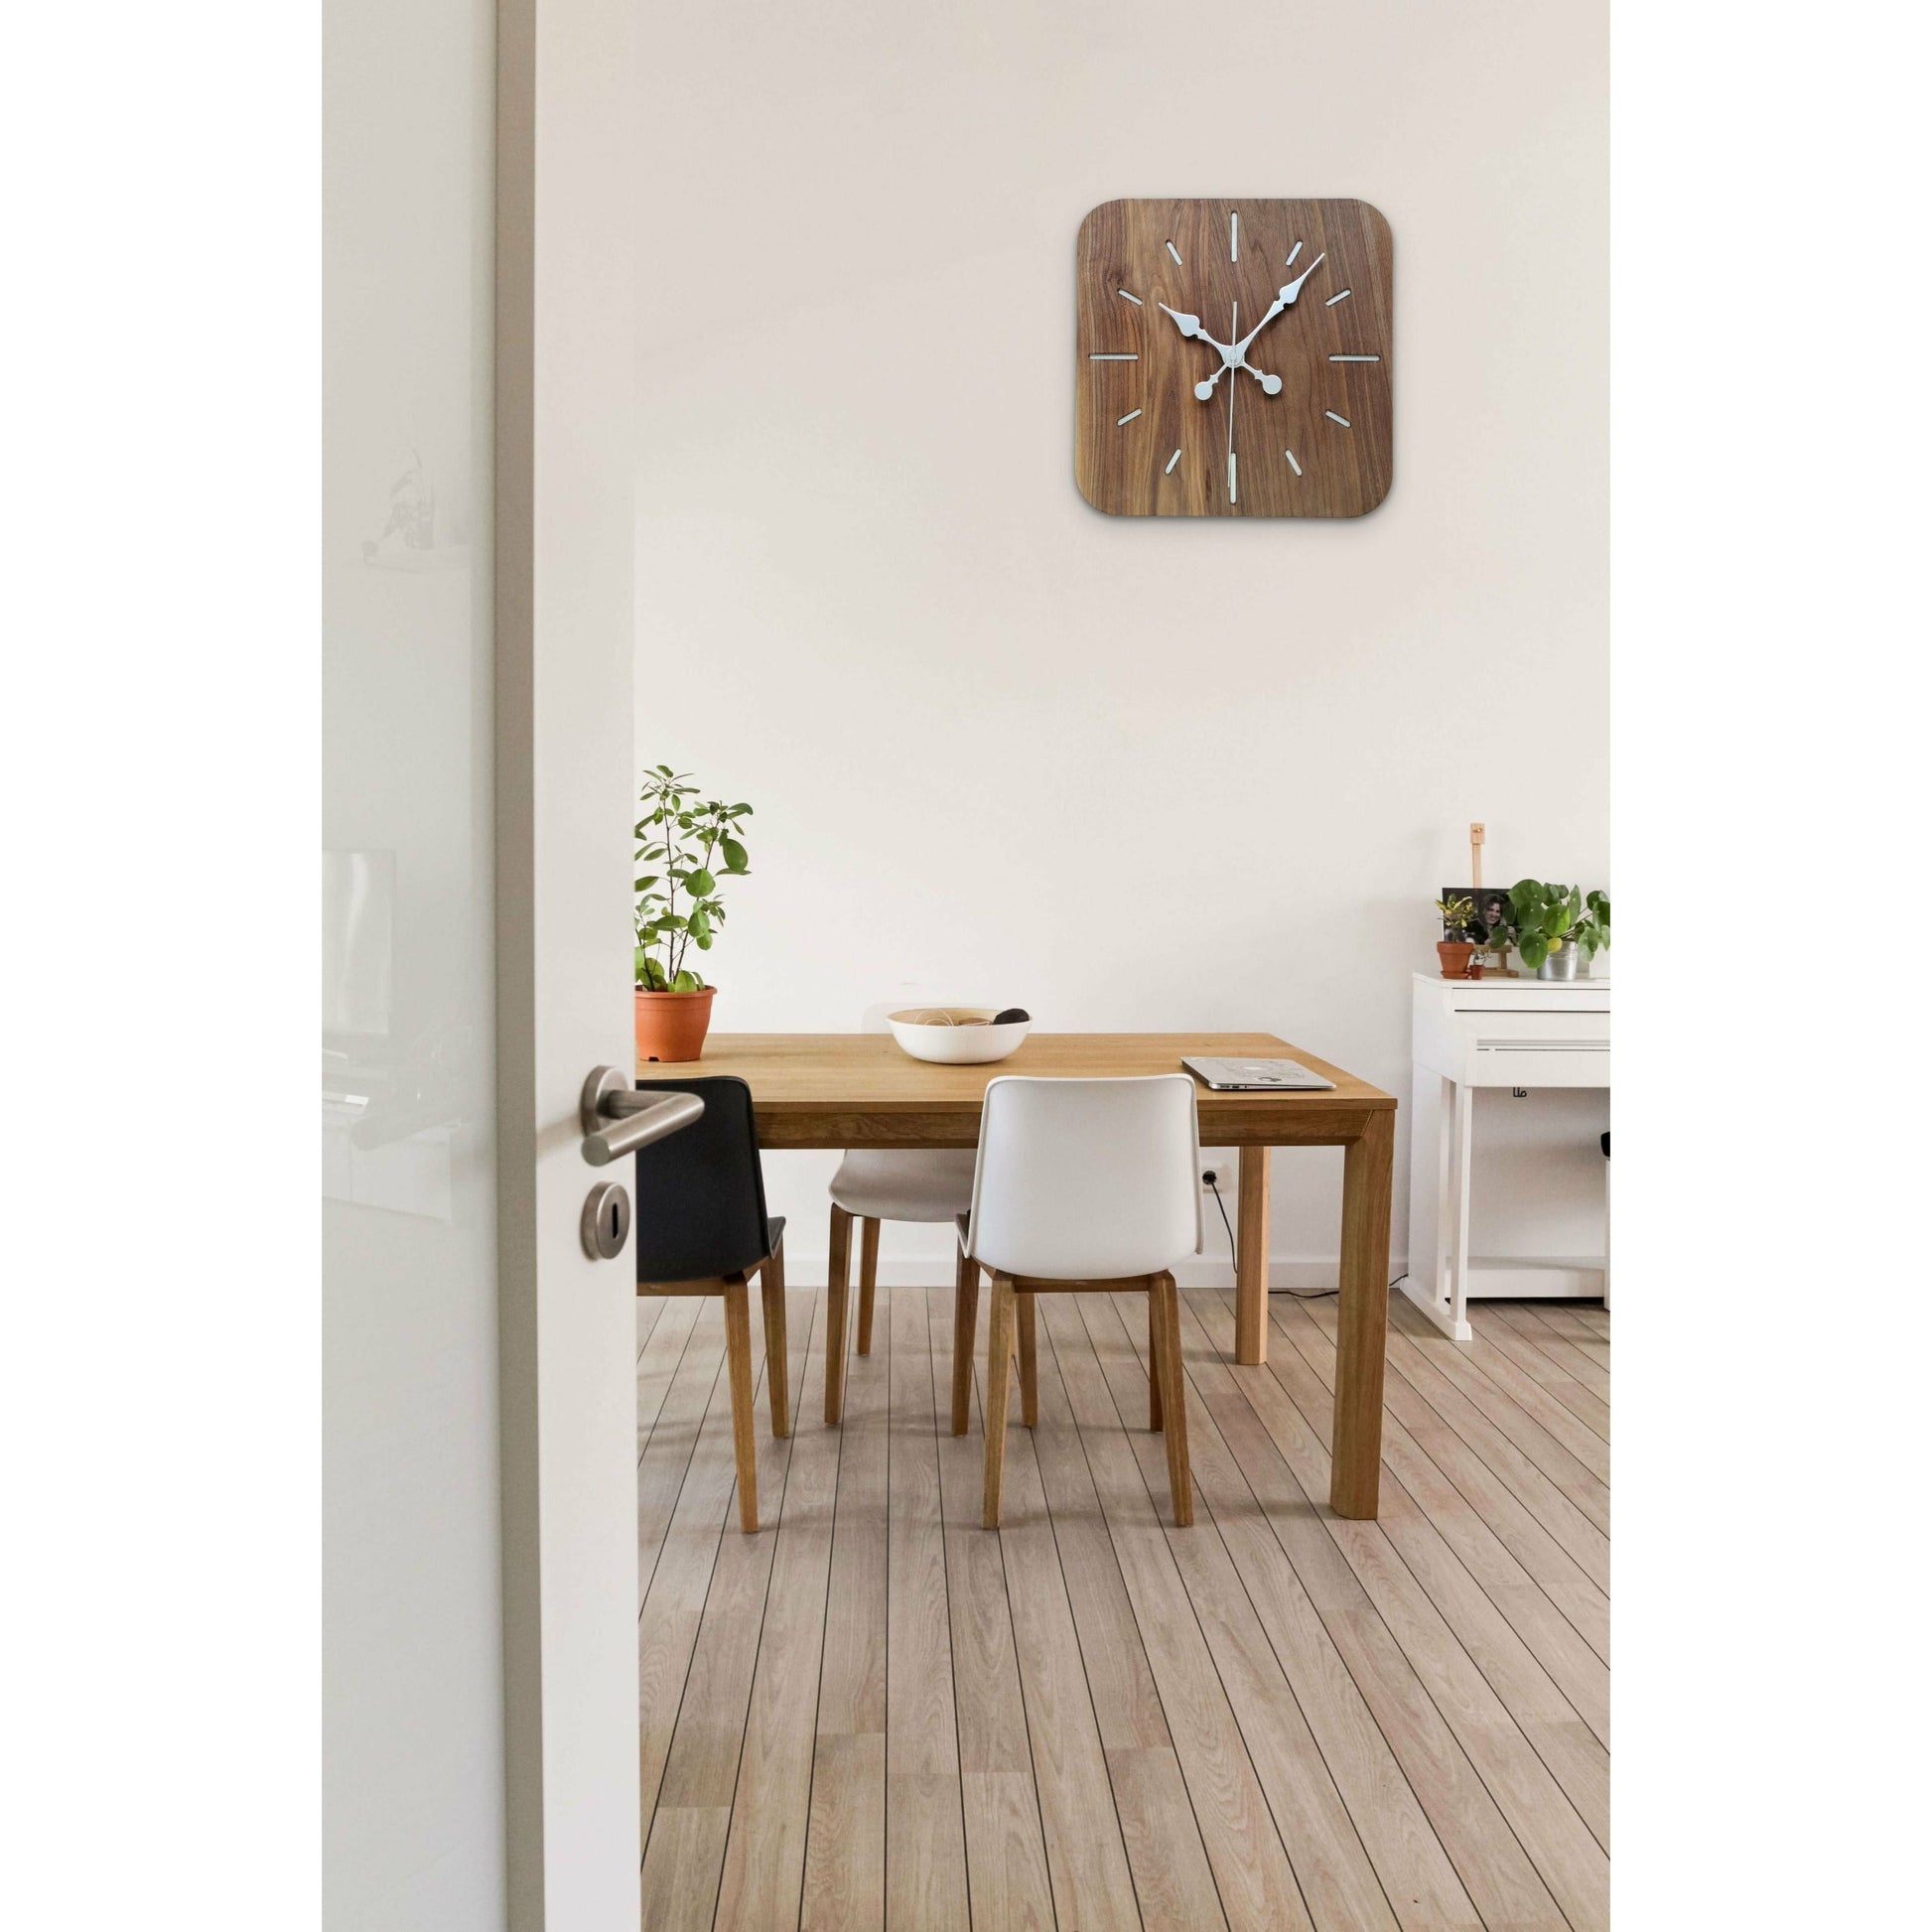 ClockDesignCo 100% Walnut Black Wooden Wall Clock | Square Modern Clock | Handmade Clock